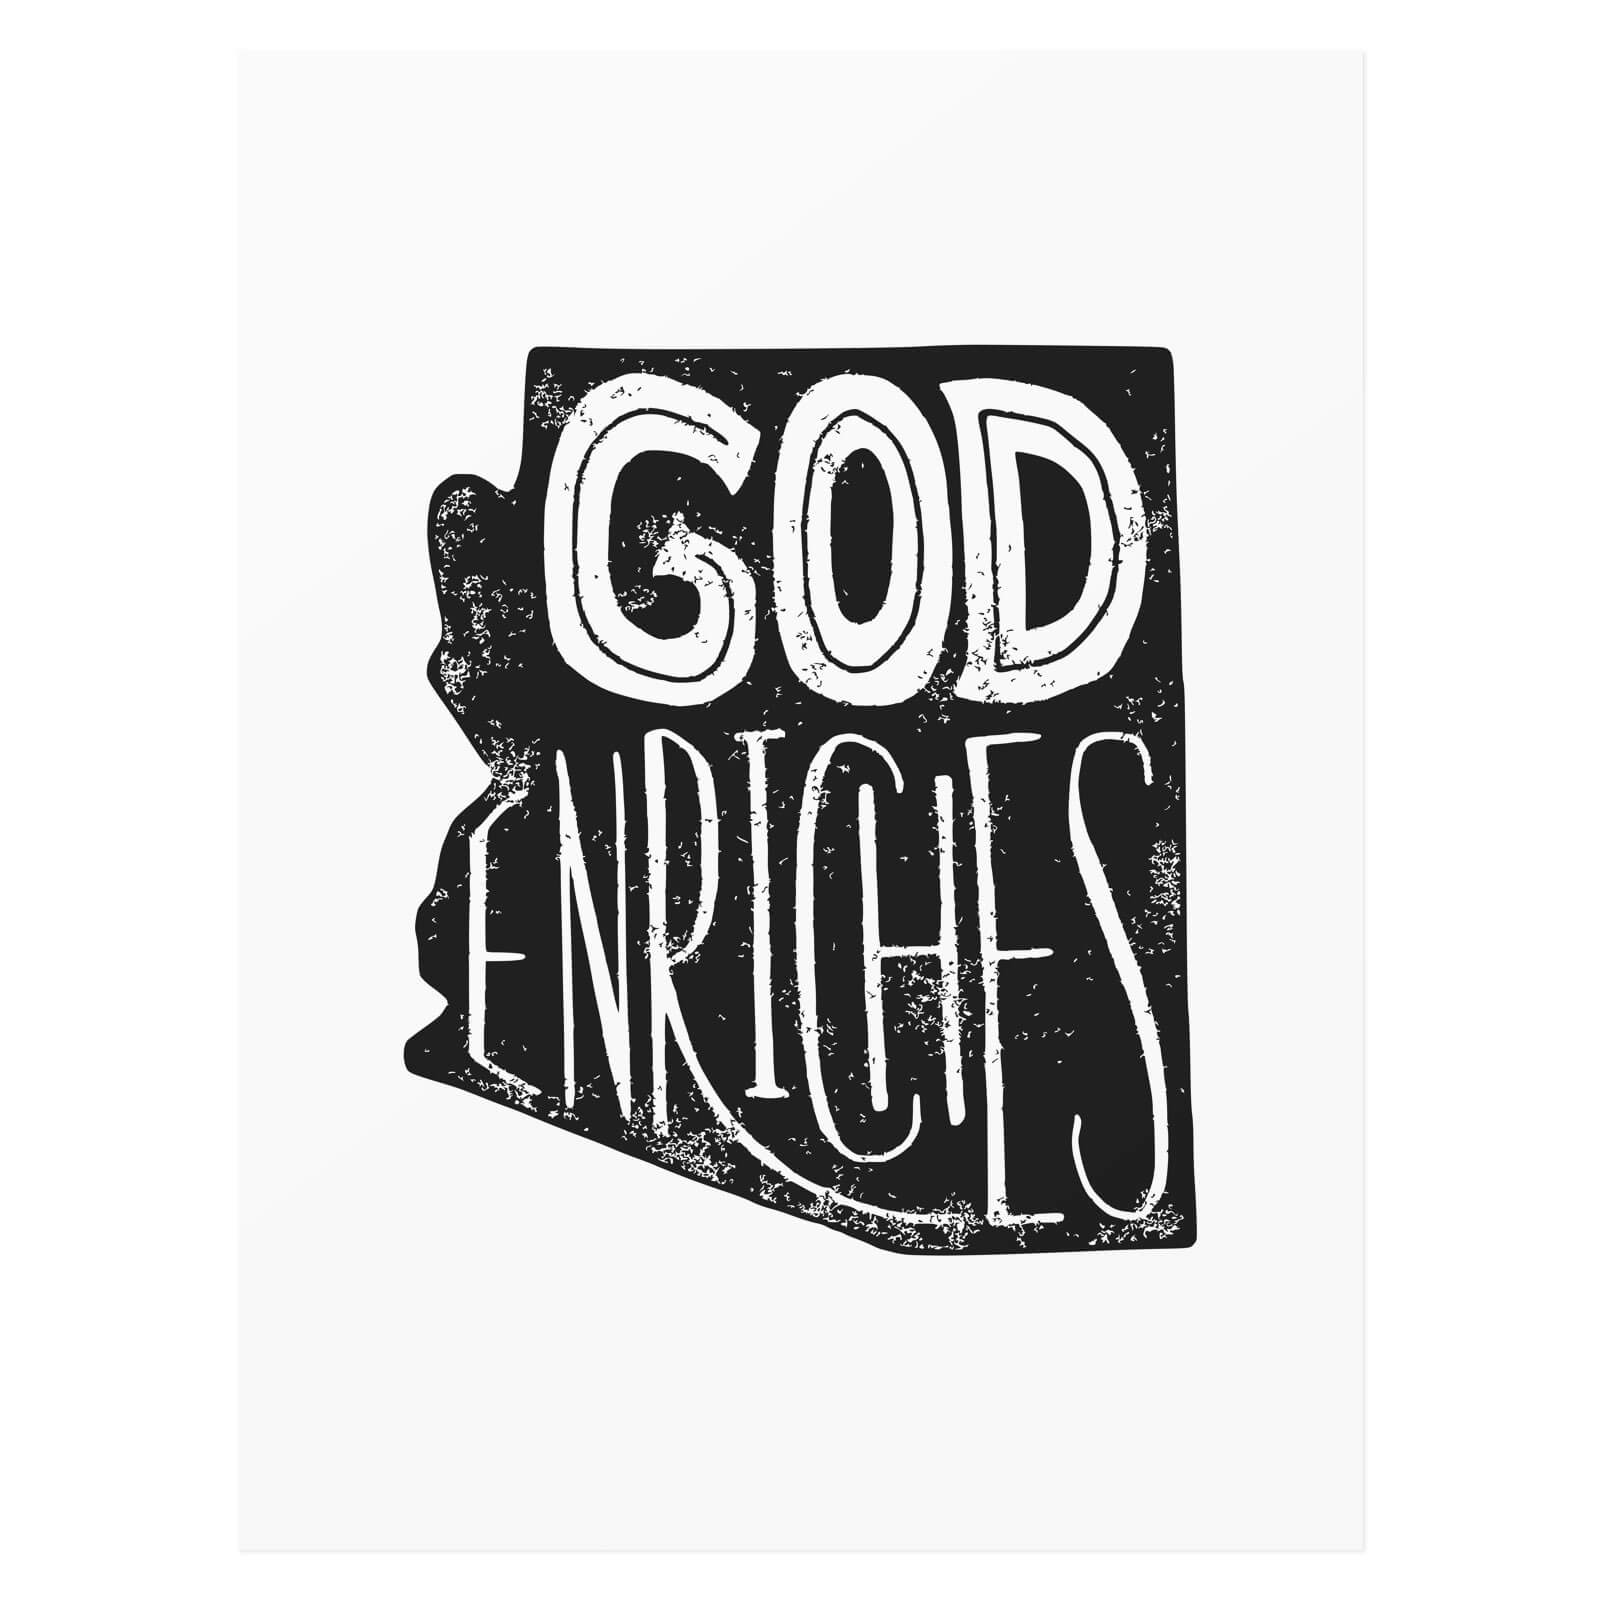 Arizona — God enriches